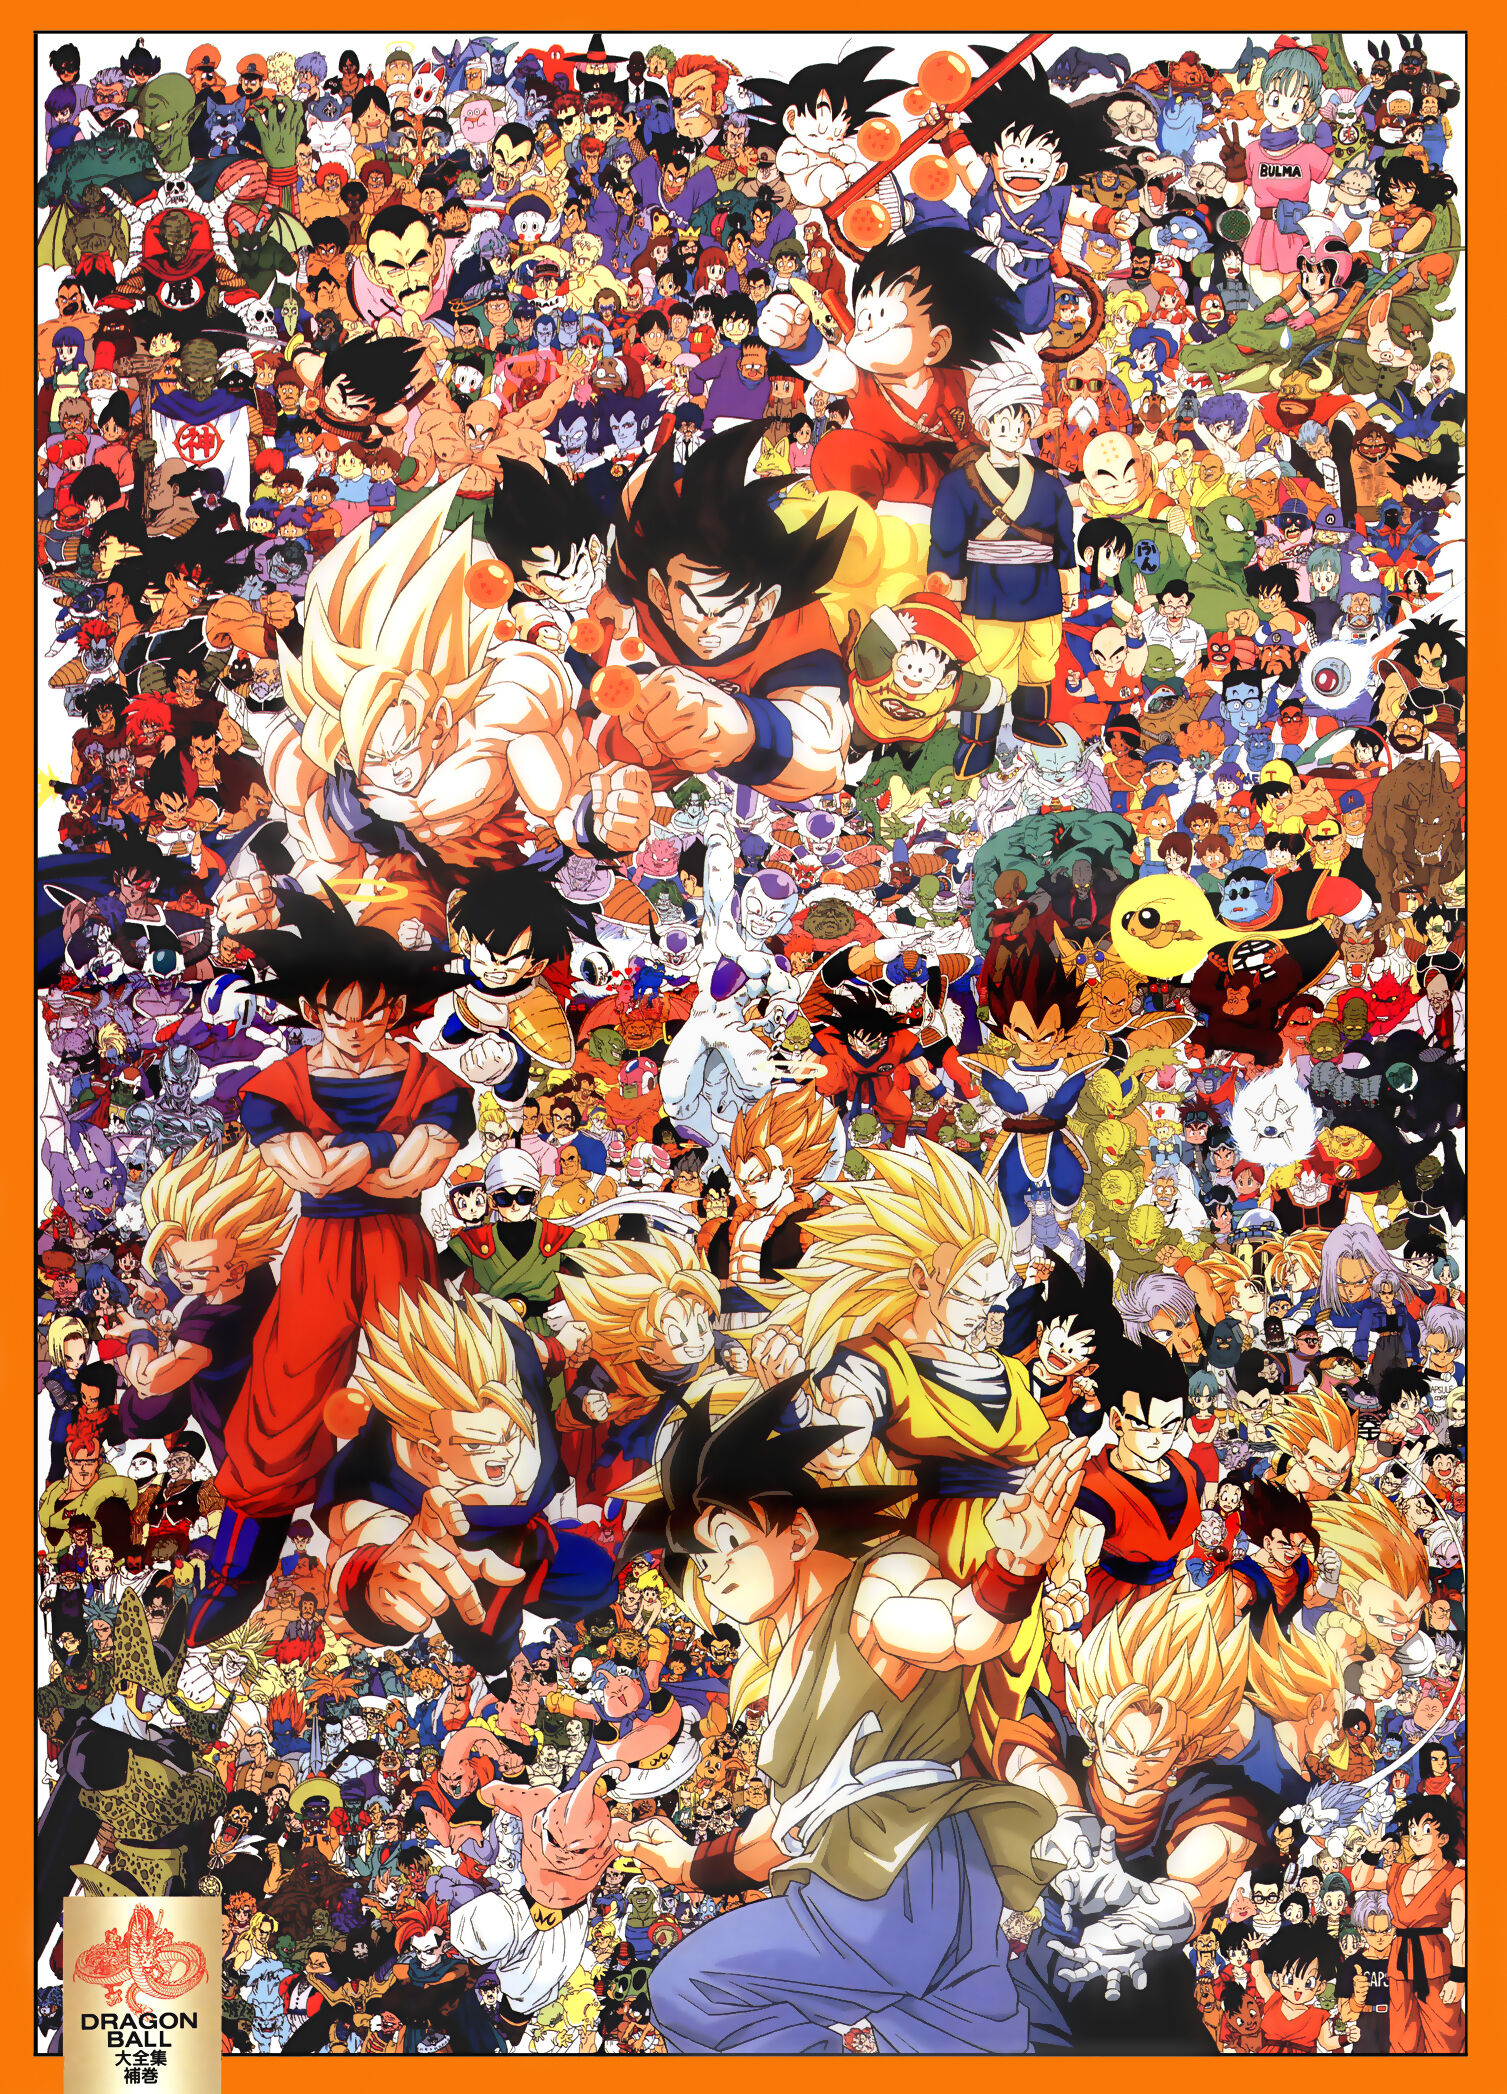 SUB] Dragon Ball Super - Episode #100 - Discussion Thread! : r/dbz